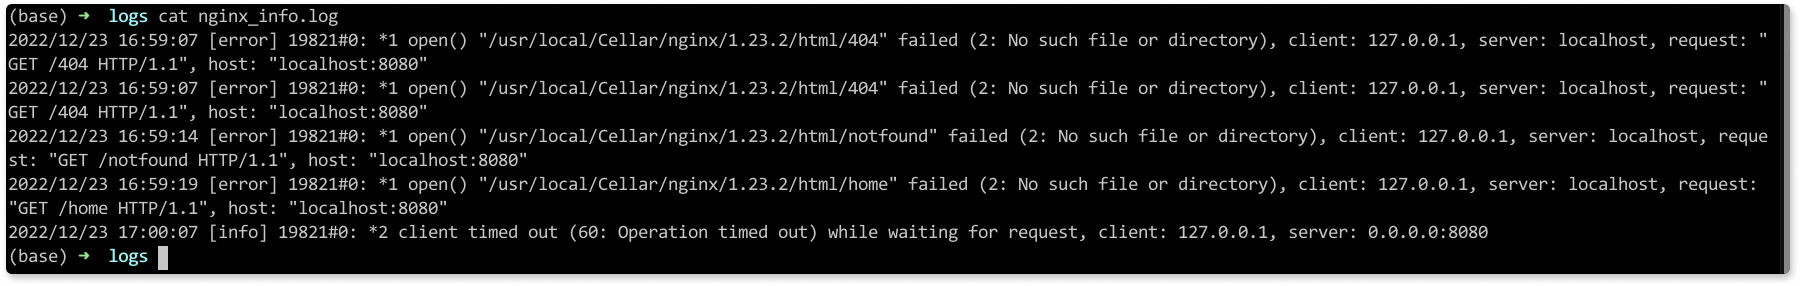 Nginx error log configuration